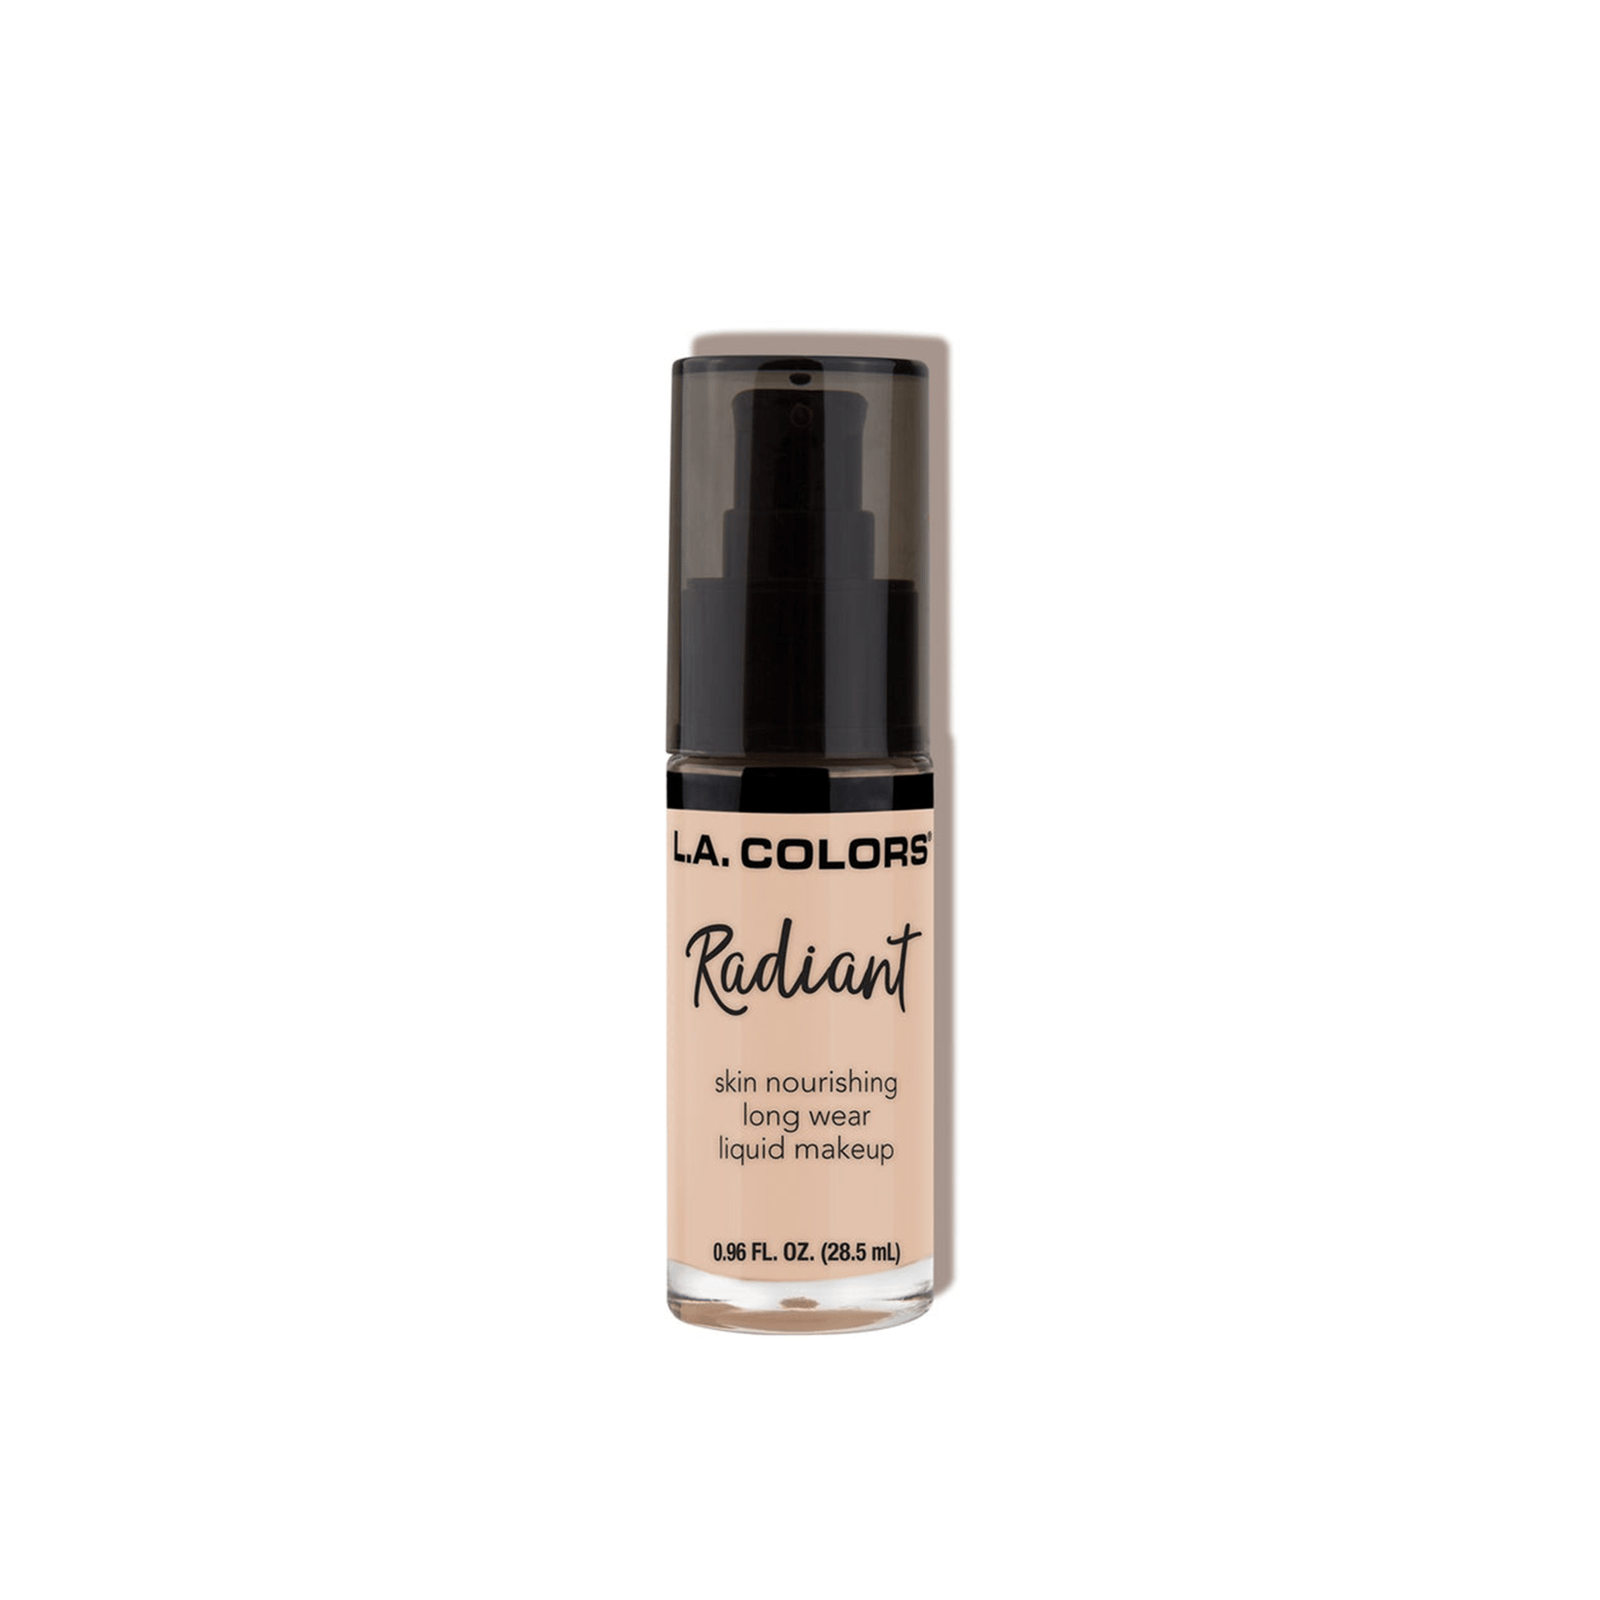 L.A. Colors Radiant Liquid Makeup Foundation CLM385 Ivory 28.5ml